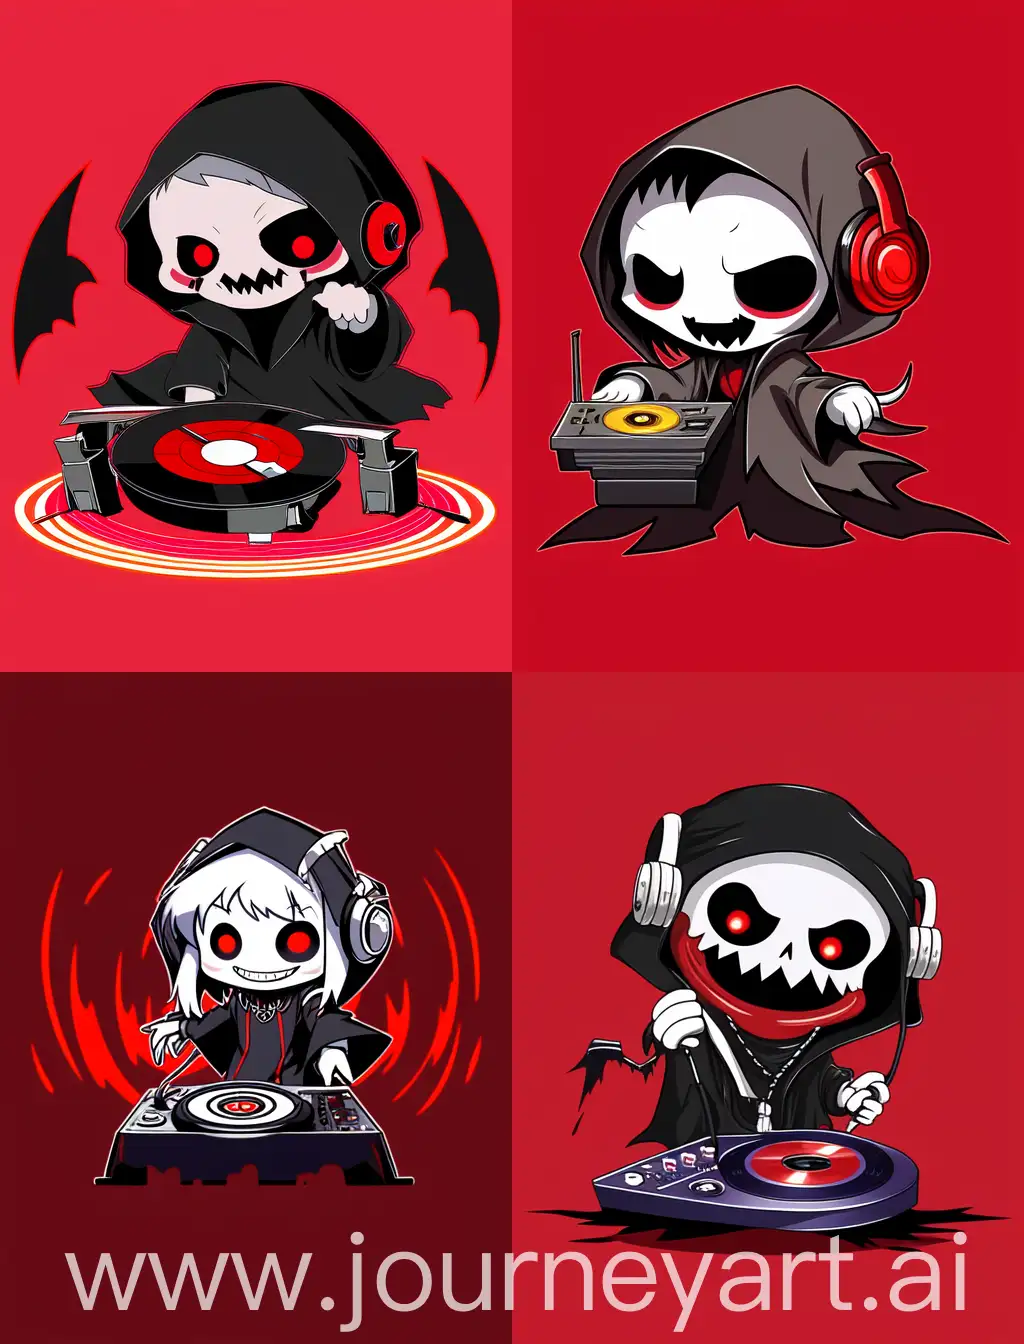 Cheerful-Chibi-Anime-Grim-Reaper-DJ-in-Vibrant-Cartoon-Style